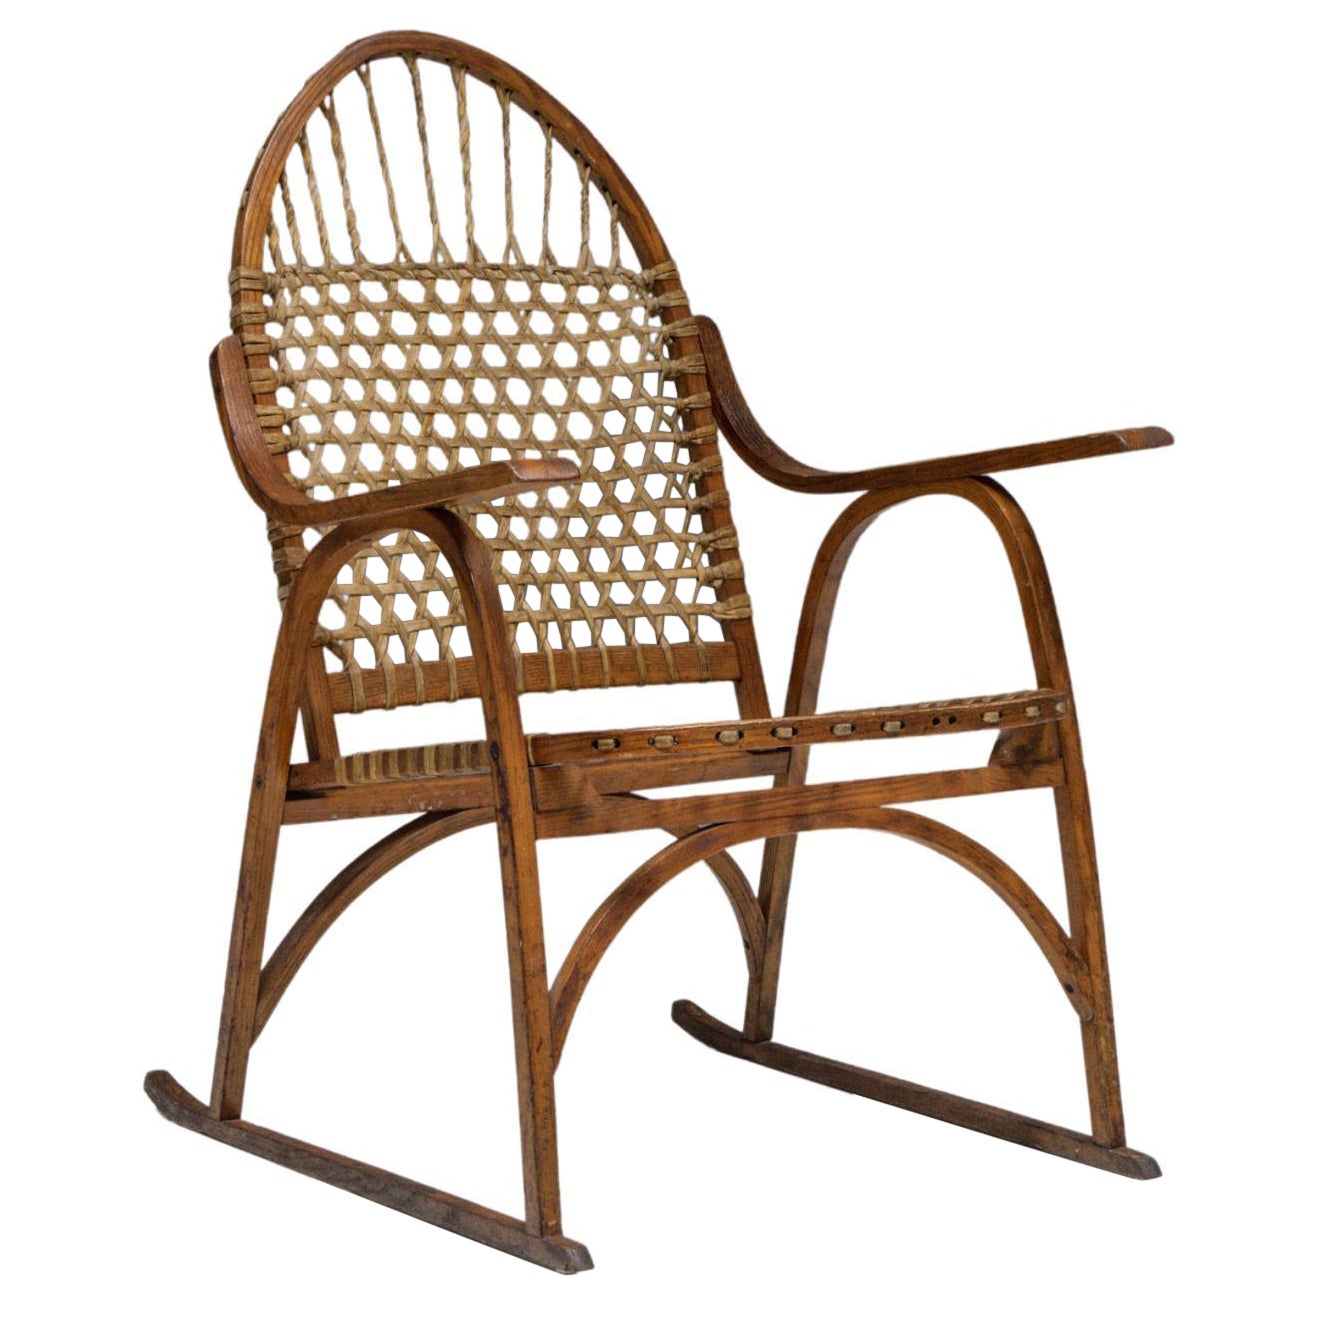 Rattan Craftsman Chair, French, Mid-Century Modern, 1950's